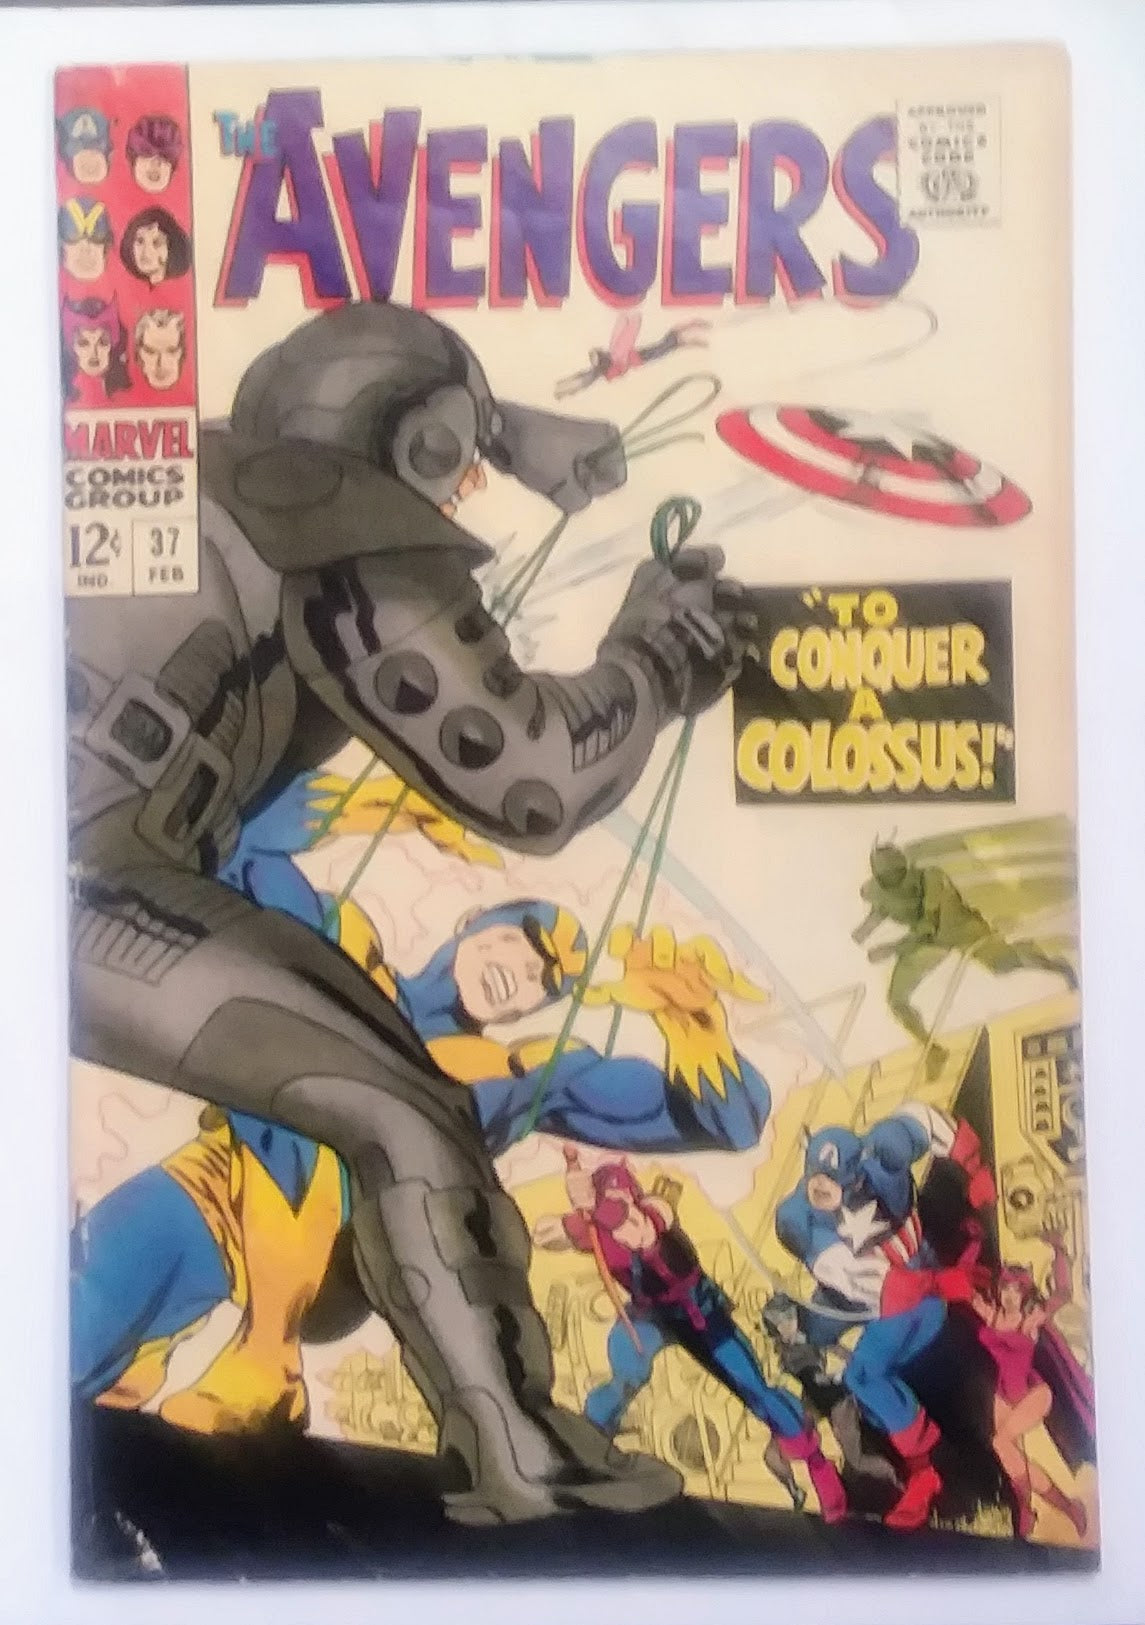 Avengers #037, Marvel Comics (February 1967)